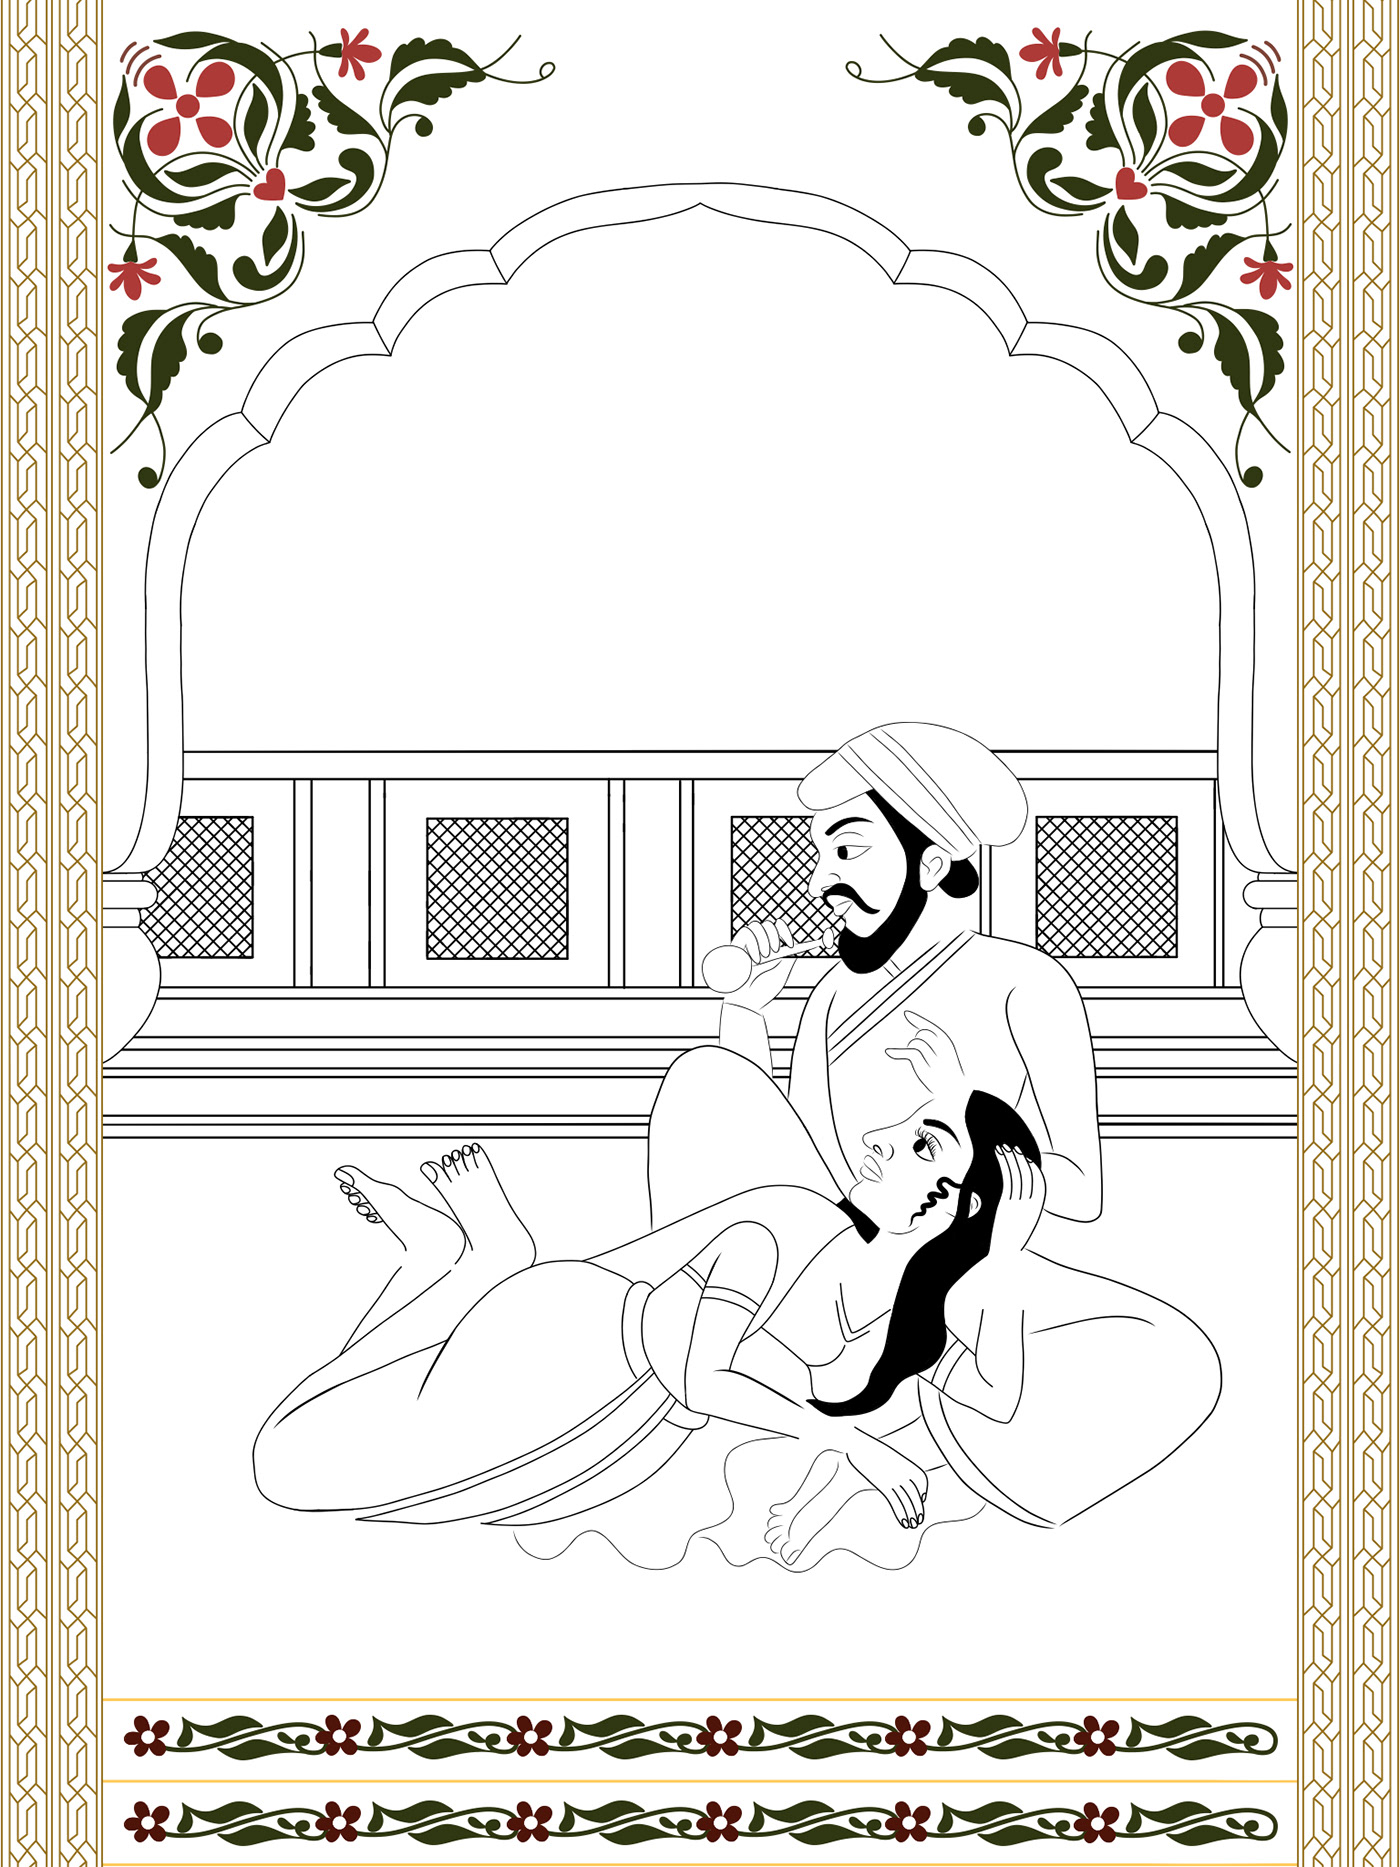 digital illustration digital painting art mughal romance Mughal miniature painting love art